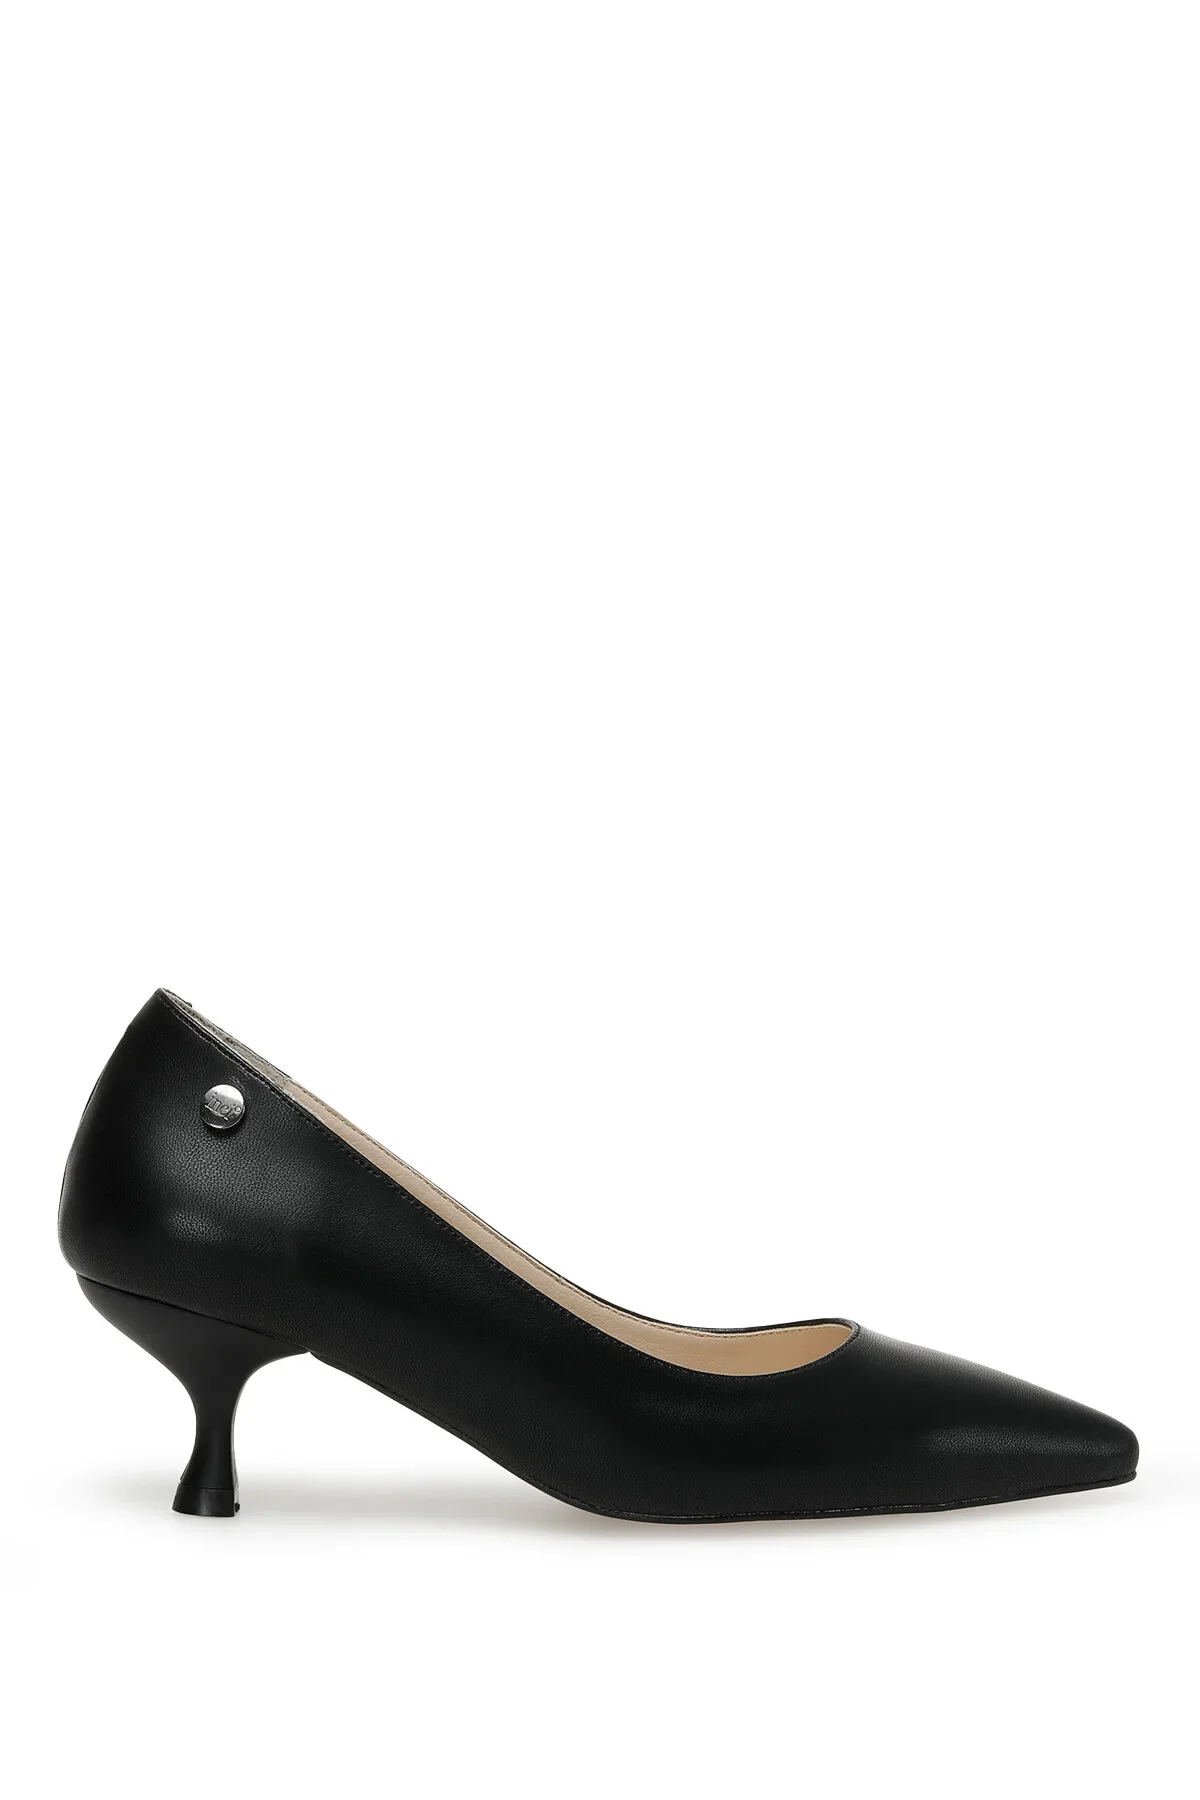 TRUDY 3FX Kadın Topuklu Ayakkabı-Siyah - 1